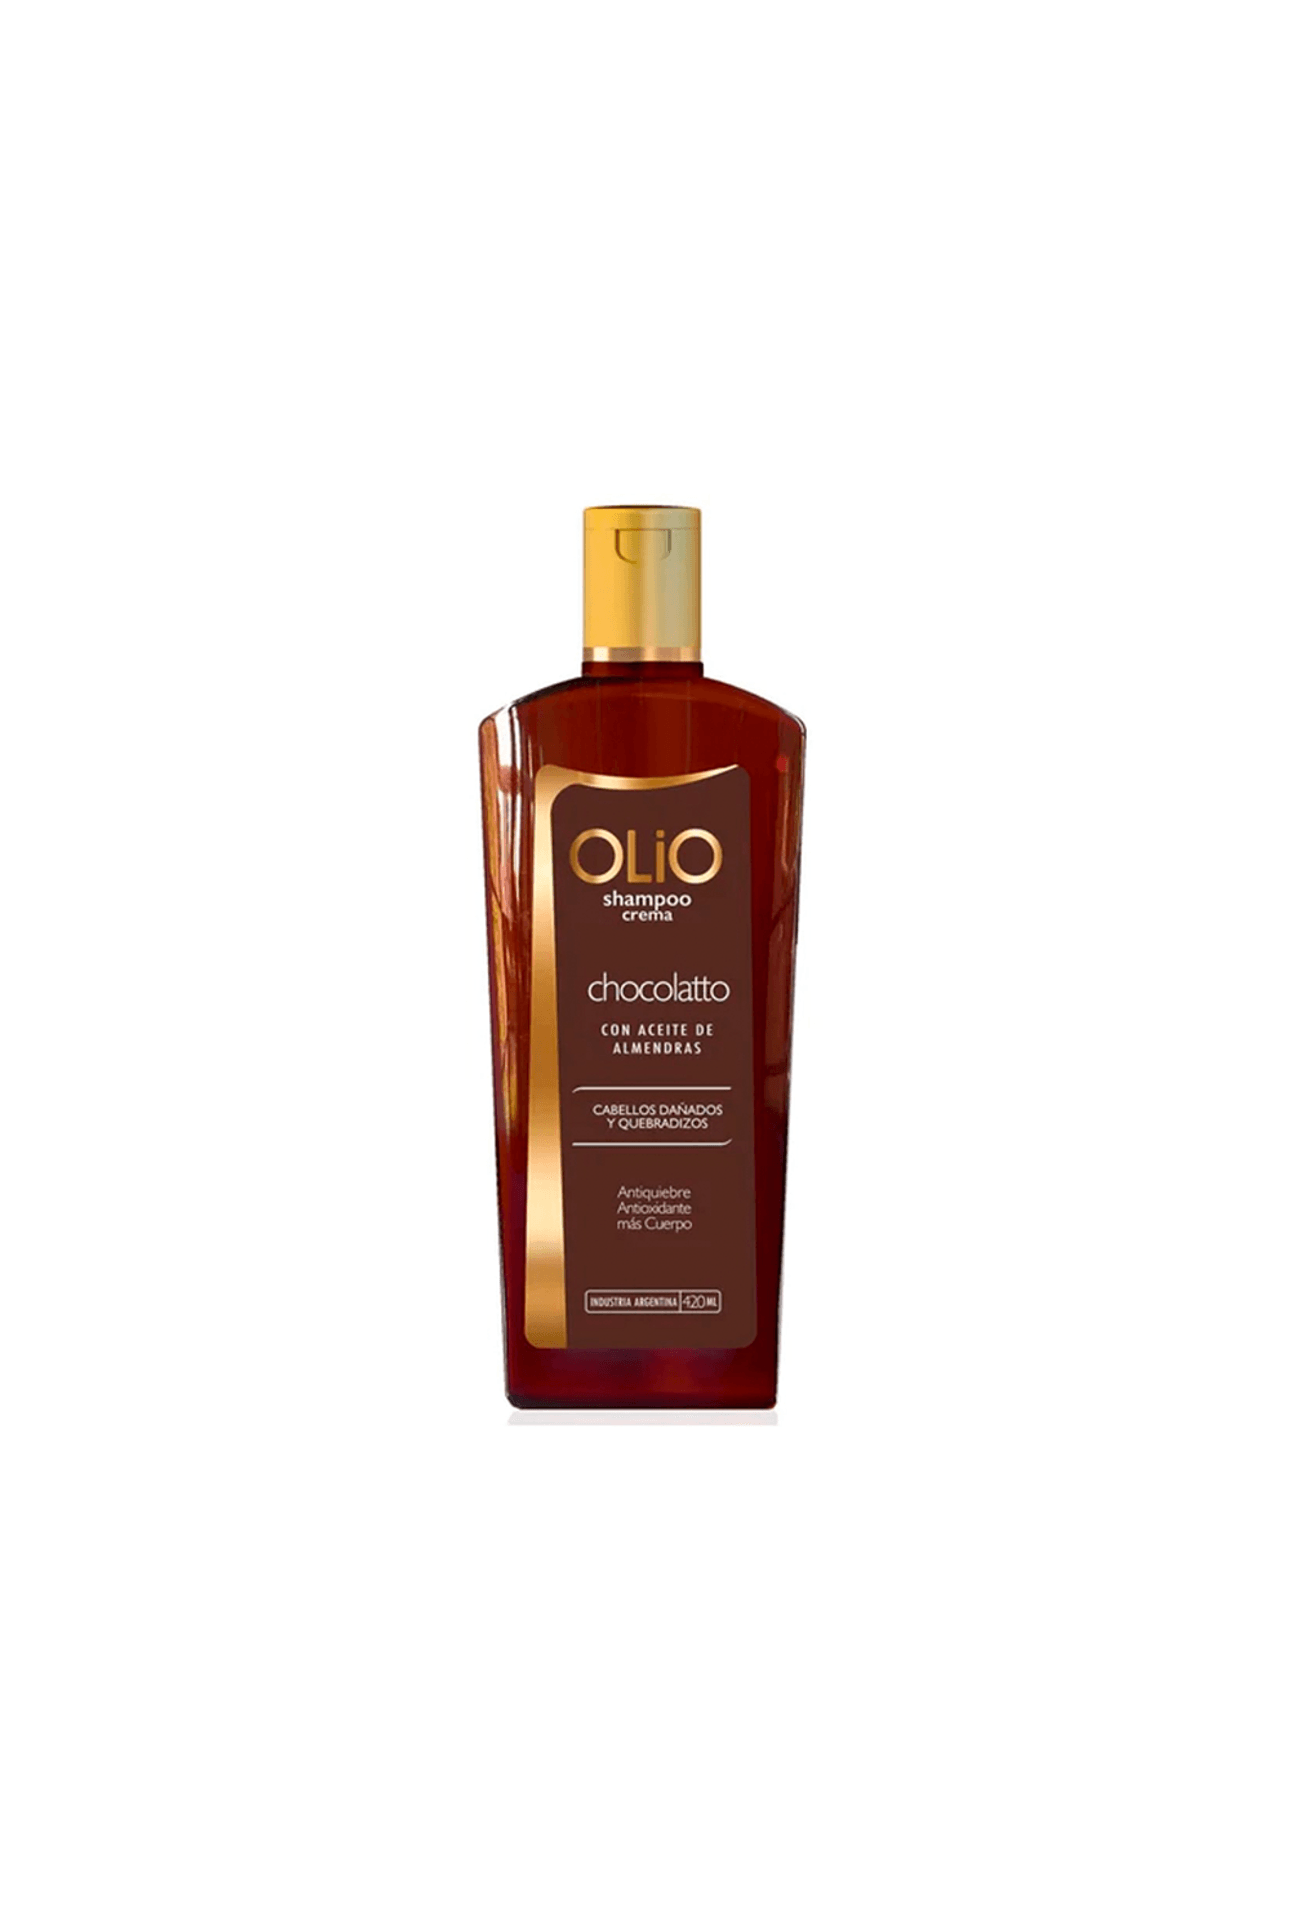 Olio-Shampoo-Chocolato-x-420-ml-7795471163370_img1